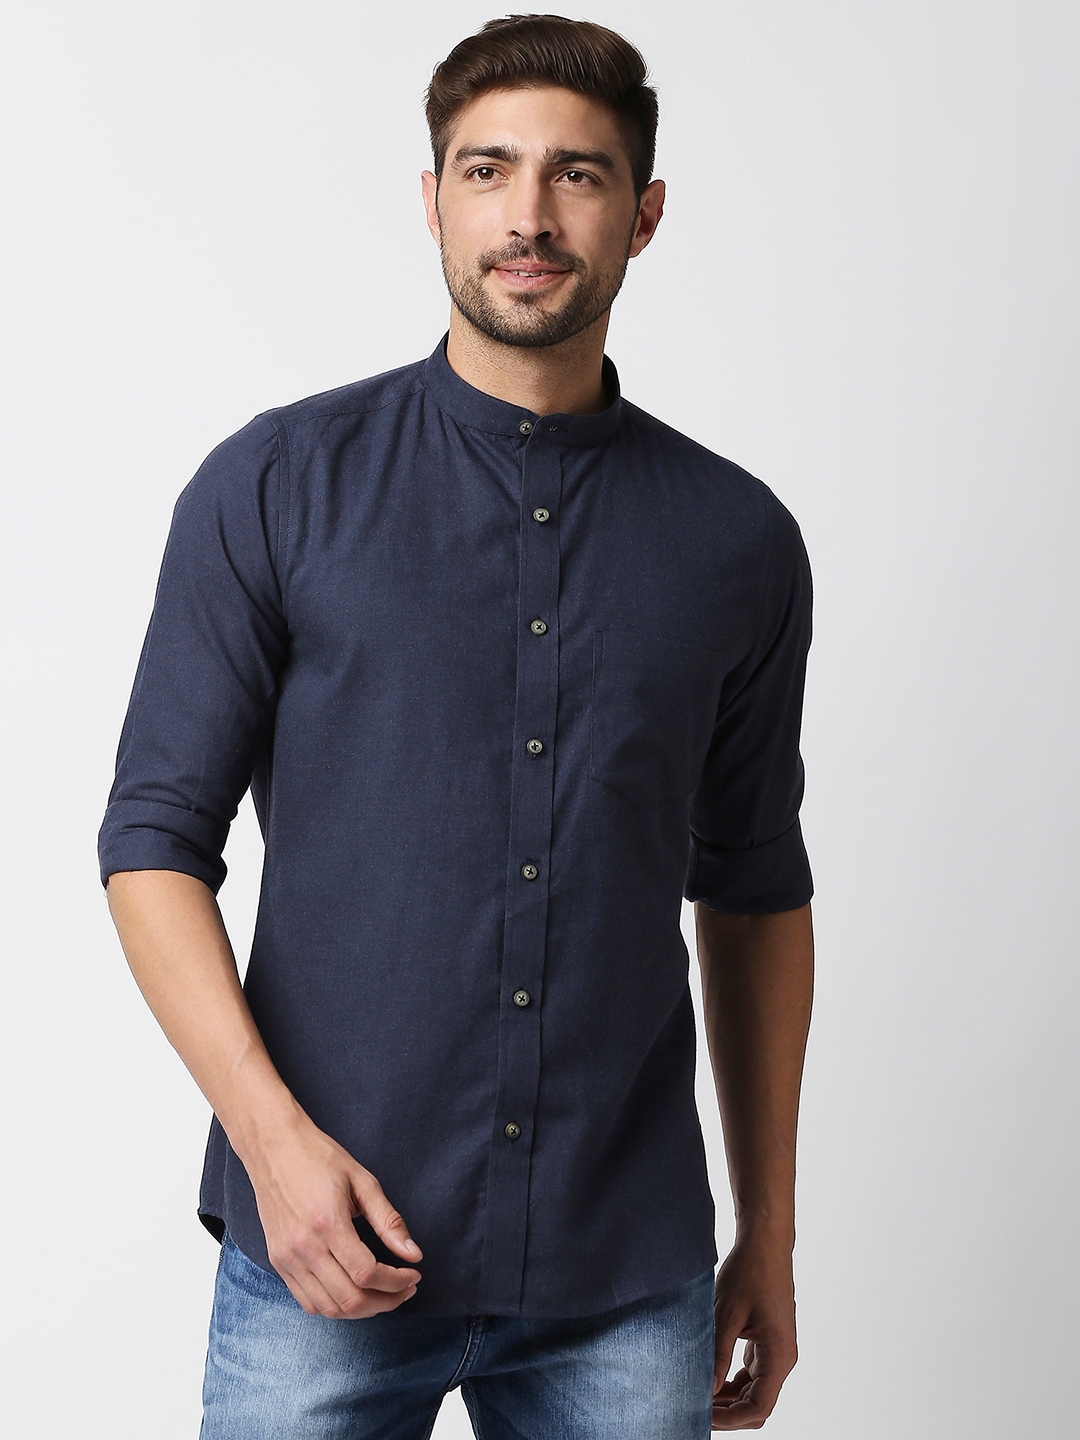 EVOQ | EVOQ's Navy Blue Flannel Full Sleeves Cotton Casual Shirt with Mandarin Collar for Men